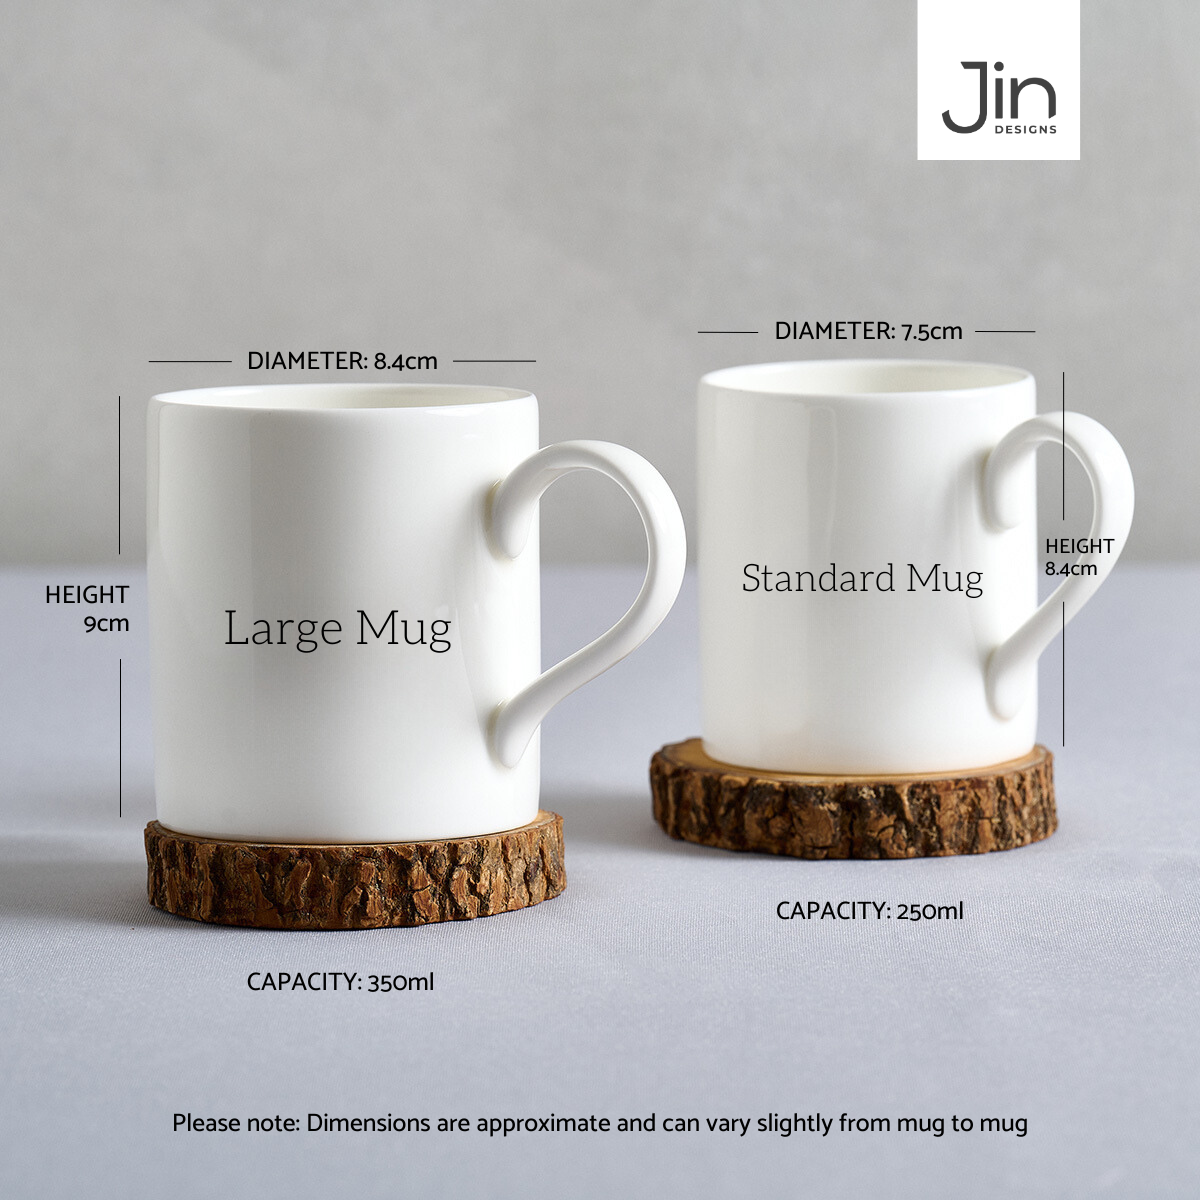 Jin Designs Mugs - Large and Standard Size